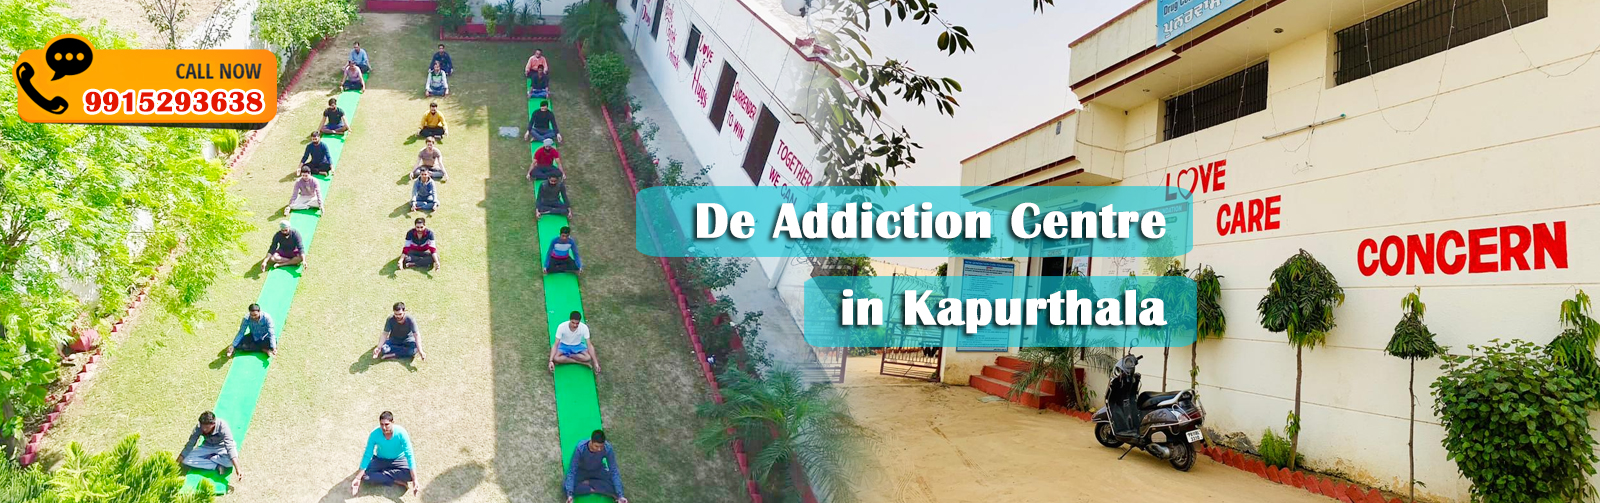 De Addiction Centre in Kapurthala